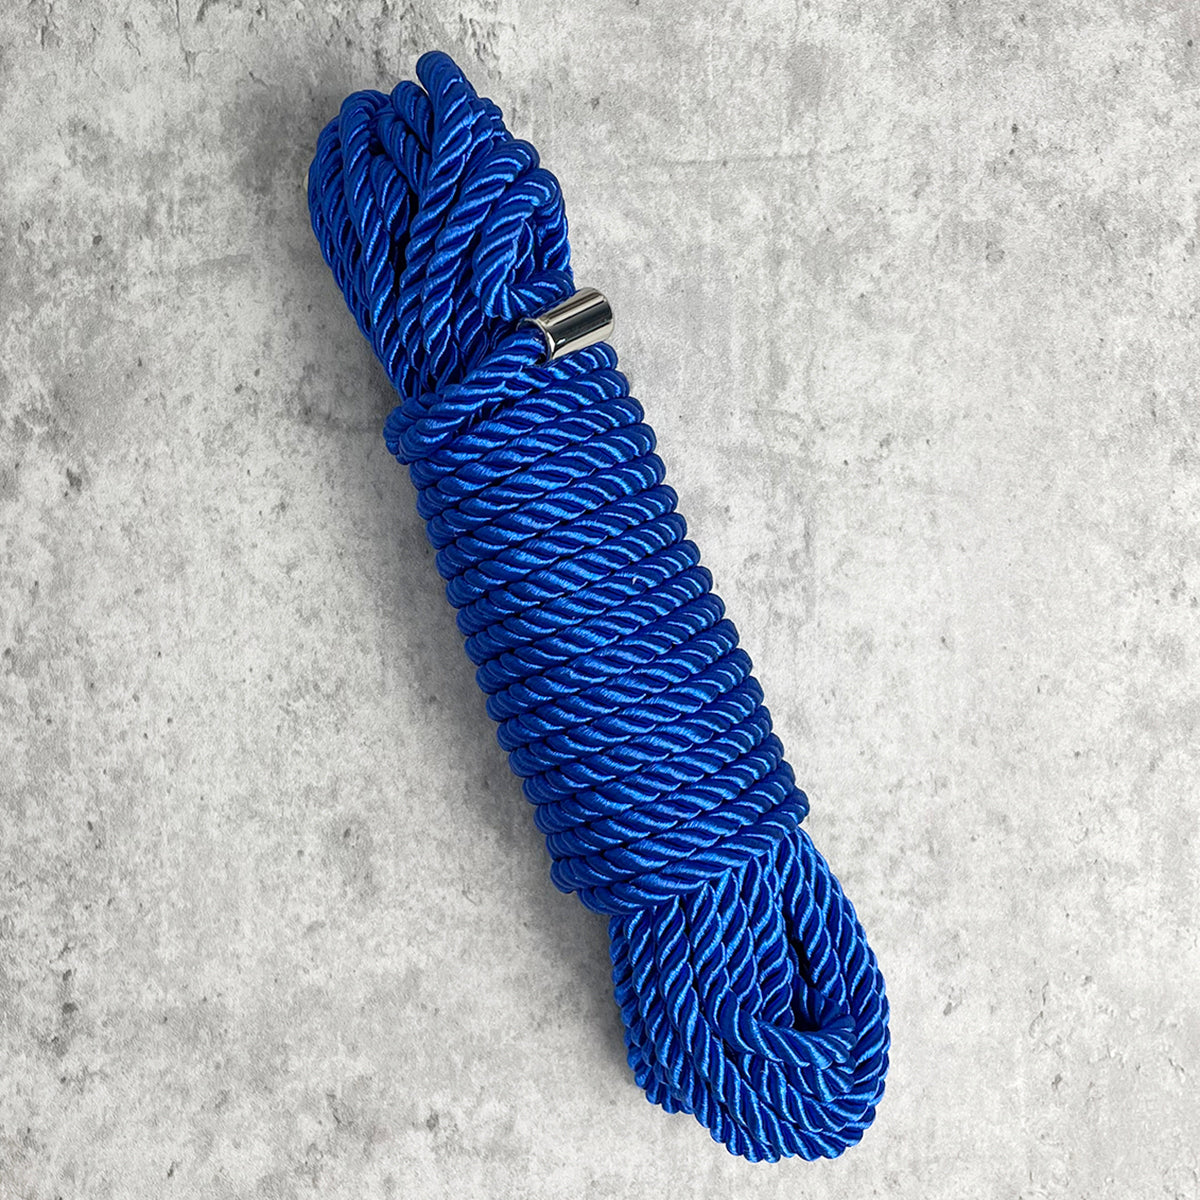 Bright Blue Nylon Shibari Bondage Rope 32Feet